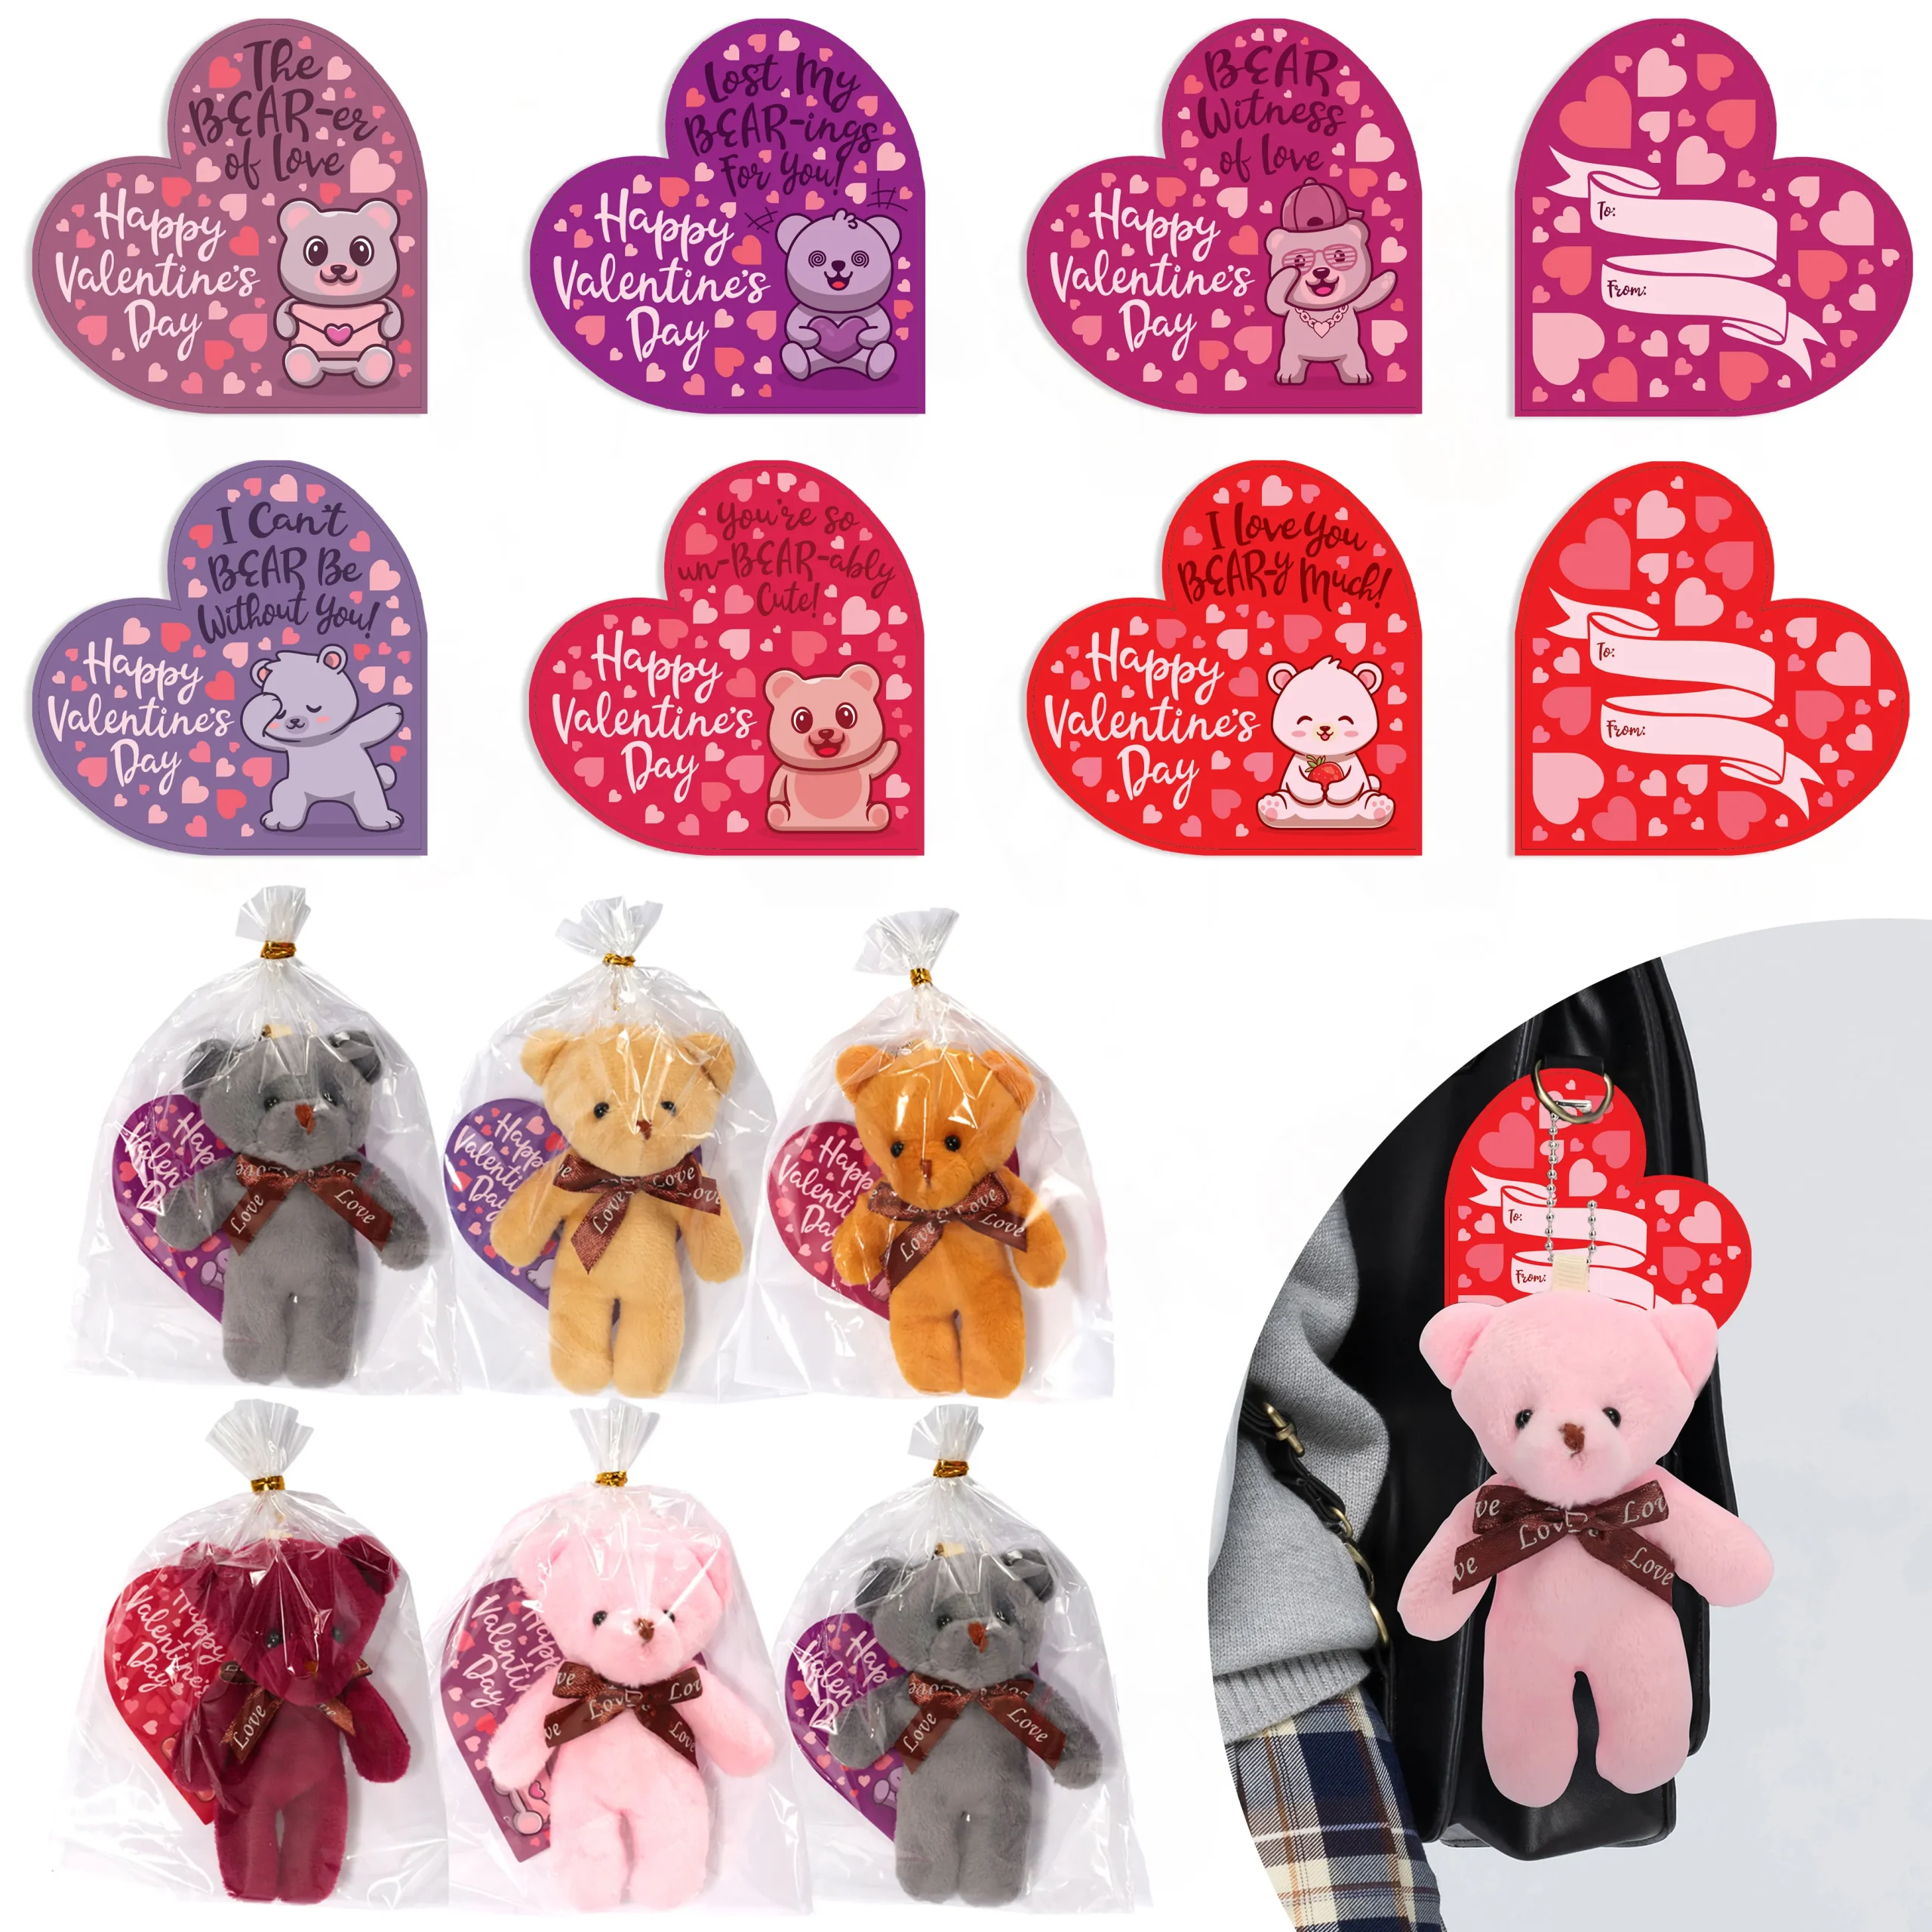 Mouliraty Valentines Day Decor 24pcs Valentine Decorations Heart Shaped Ornaments Romantic Valentine's Day Gifts Promotion on Sale, Size: One size